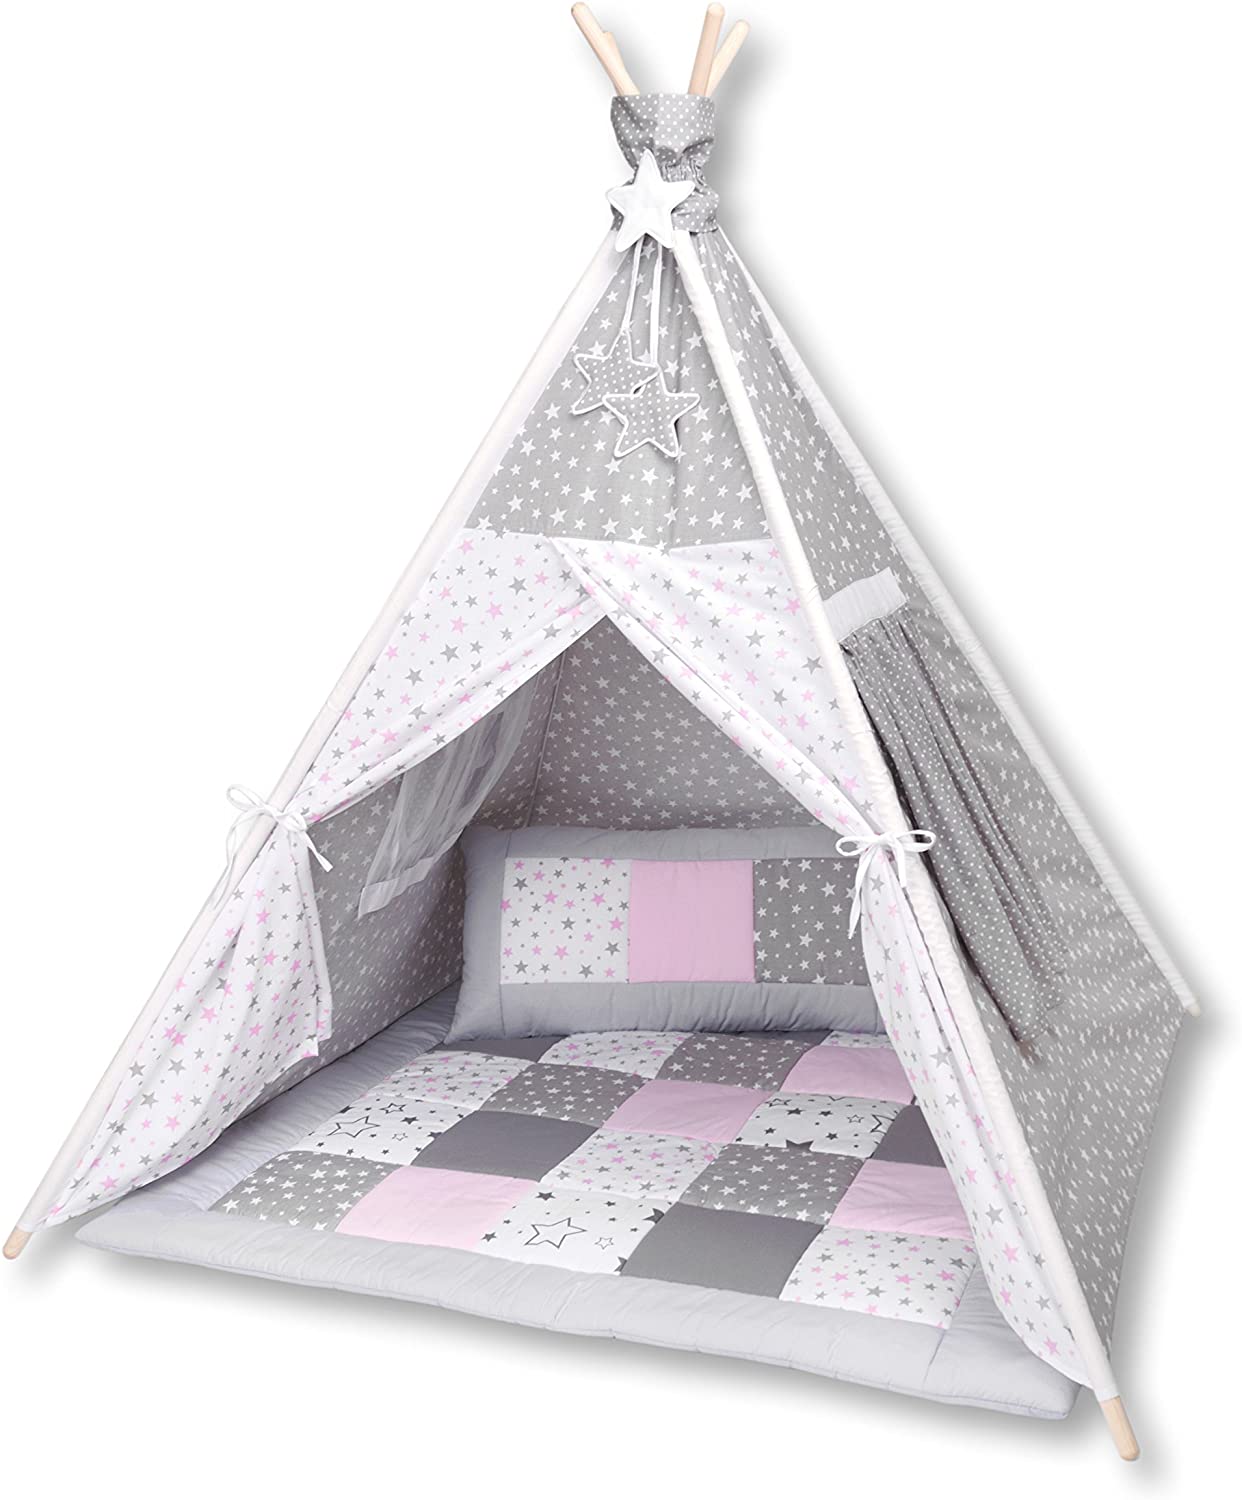 Amilian® teepi play tent for children T40